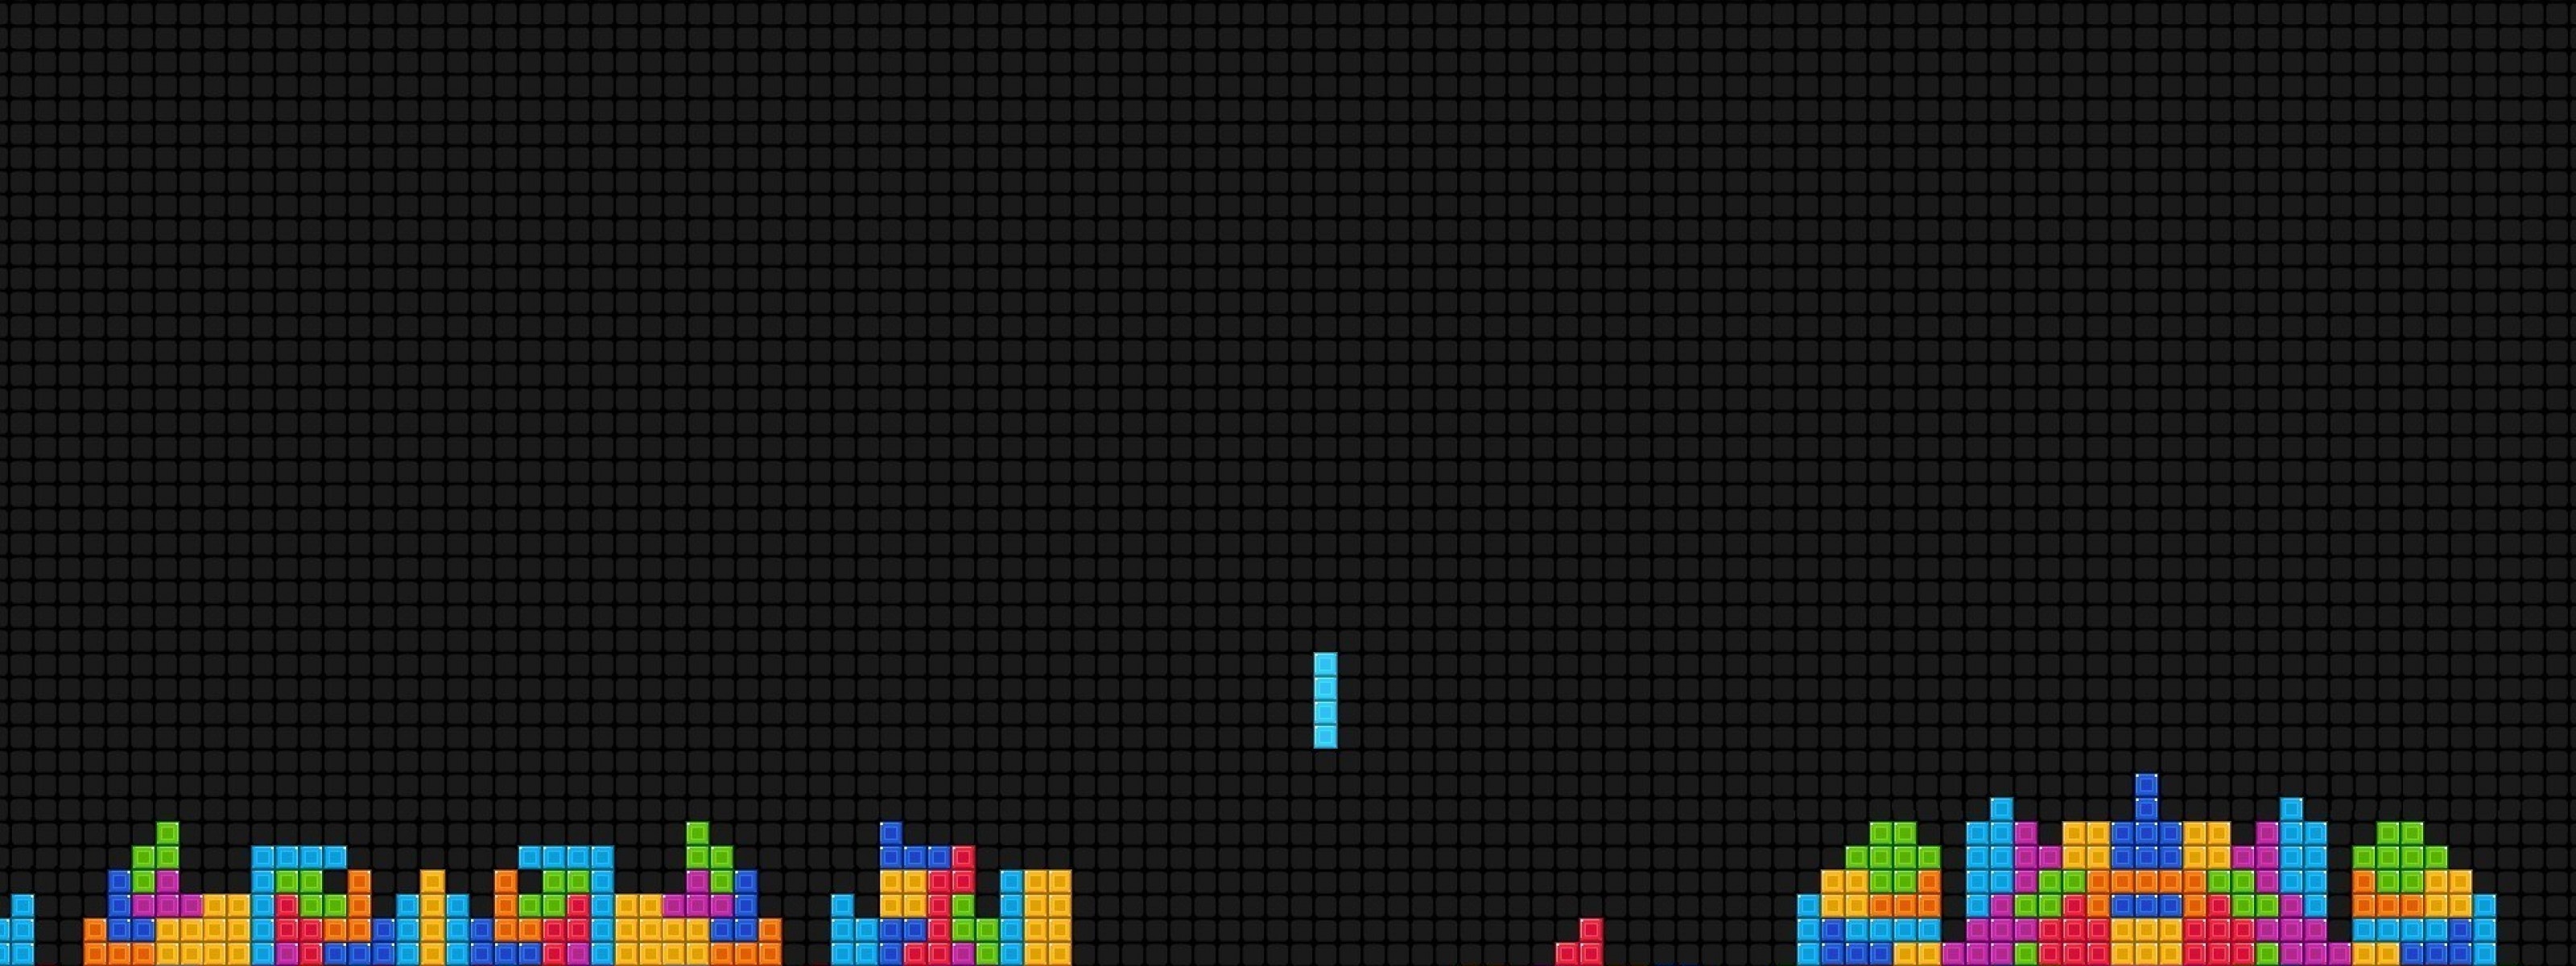 Tetris wallpaper 3200x1200 67975